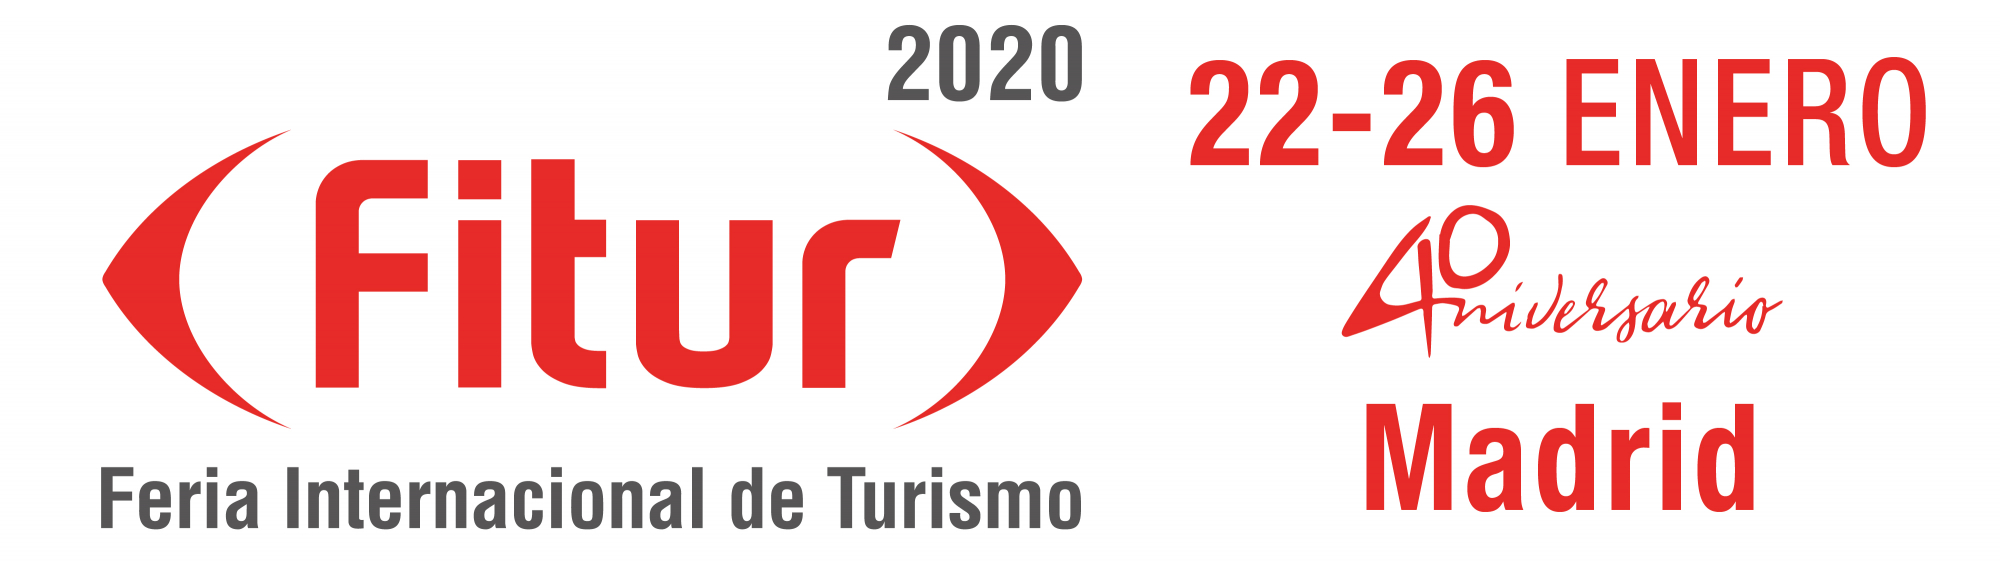 FITUR 2020 logo